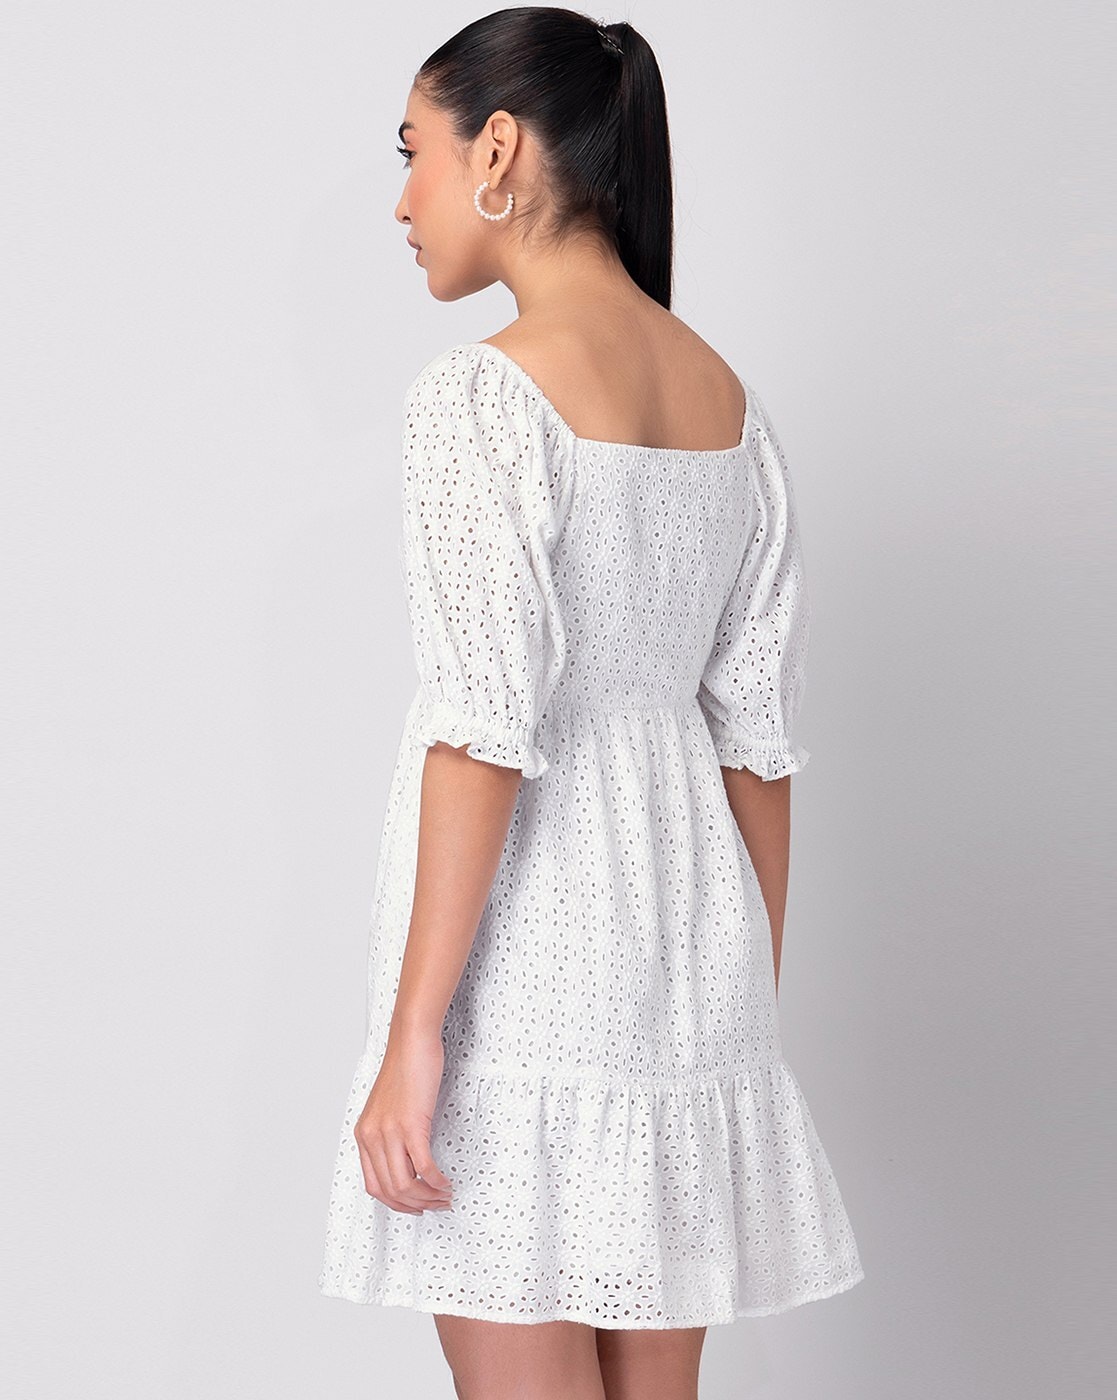 Afeef Online. Inner-Wear For Women Fanilla White Set of 3 Pieces (A17)